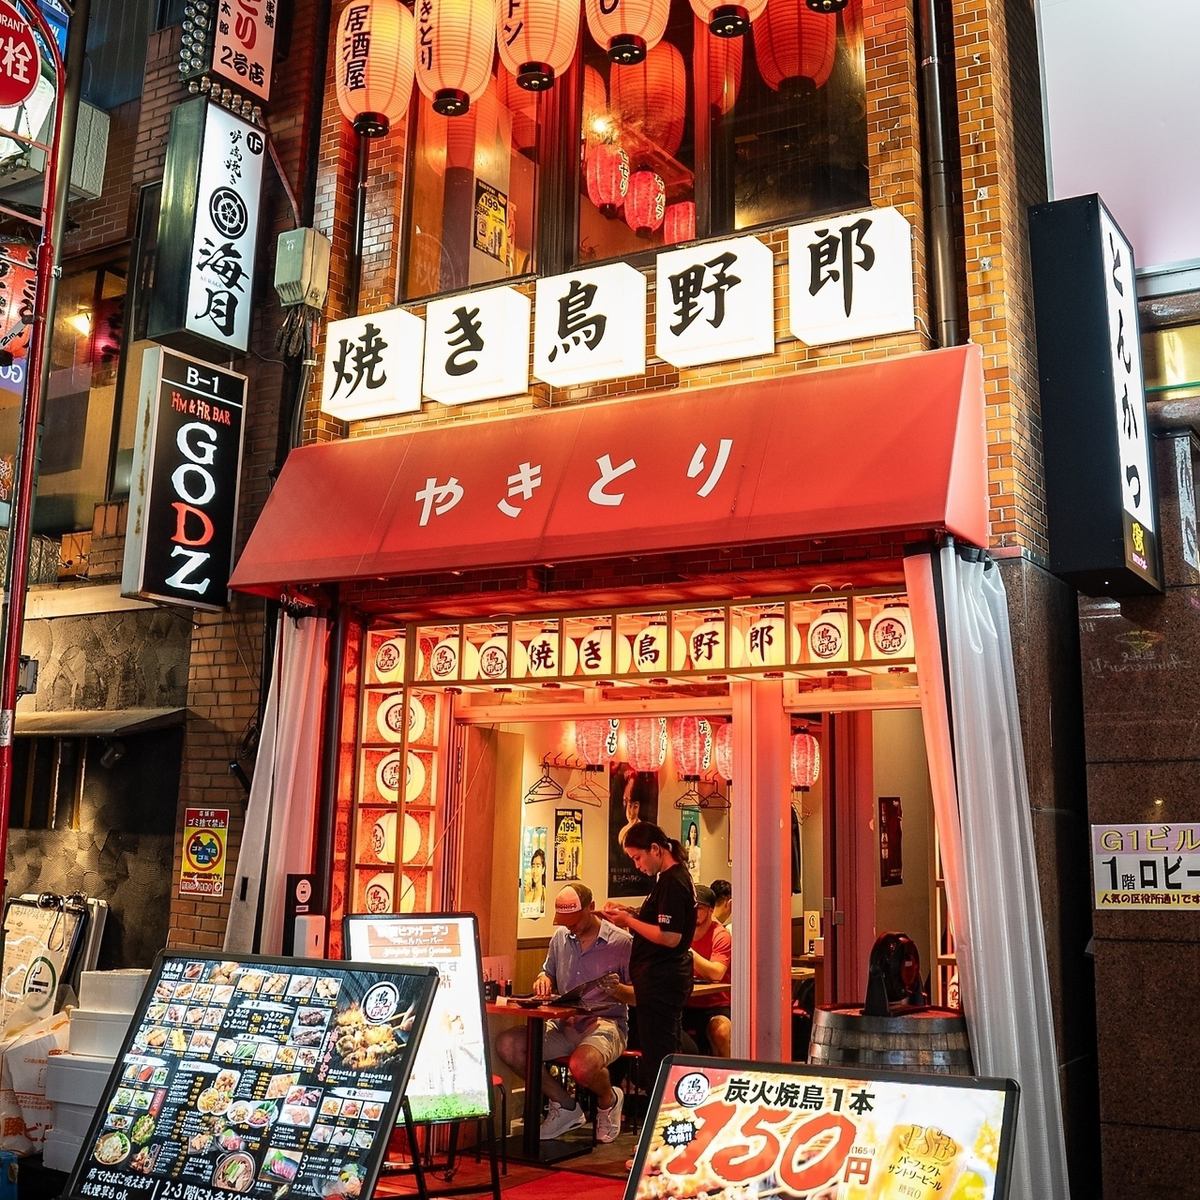 Open until 8am every day! Showa retro yakitori bar